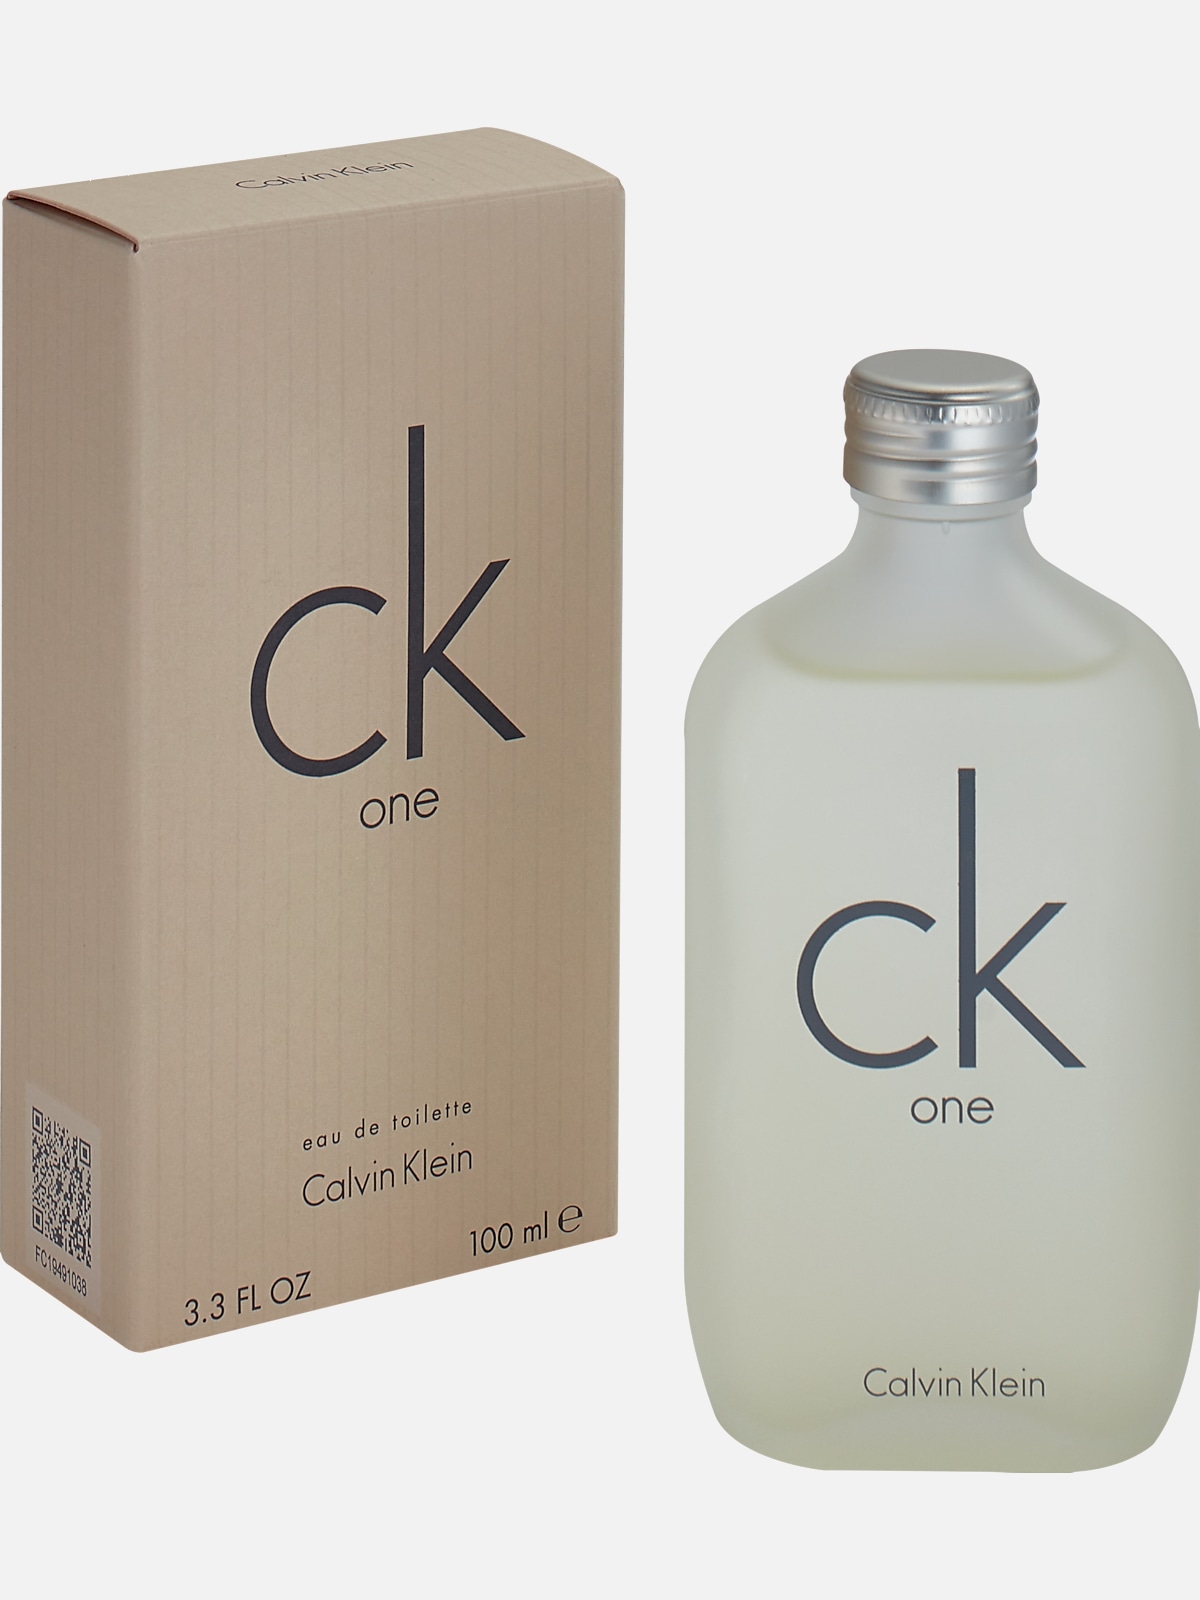 Calvin Klein Gifts| Wearhouse One Toilette3.4 Eau de oz. | Men\'s